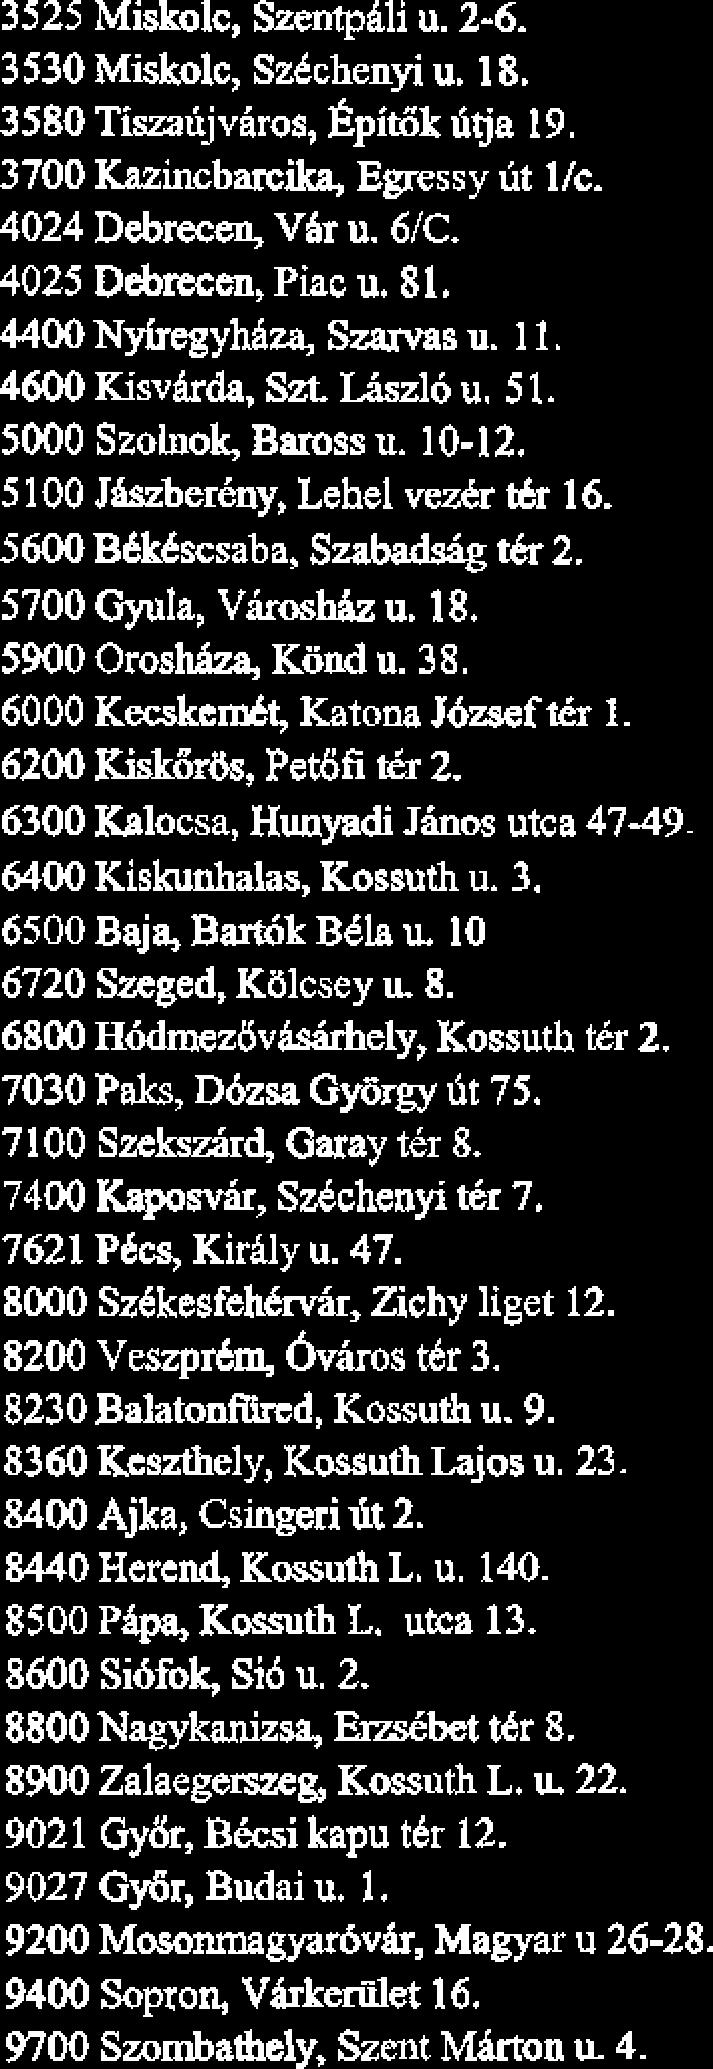 1119 Budapest, Fehkhri tit 95. 1124 Budapest, Alkotis St 53. 1132 Budapest, Nyugati t& 5. 1134 Budapest, D&ni utca 23, 1138 Budapest, Vki dt 178-182. 1139 Budapest, VAci ht 85.